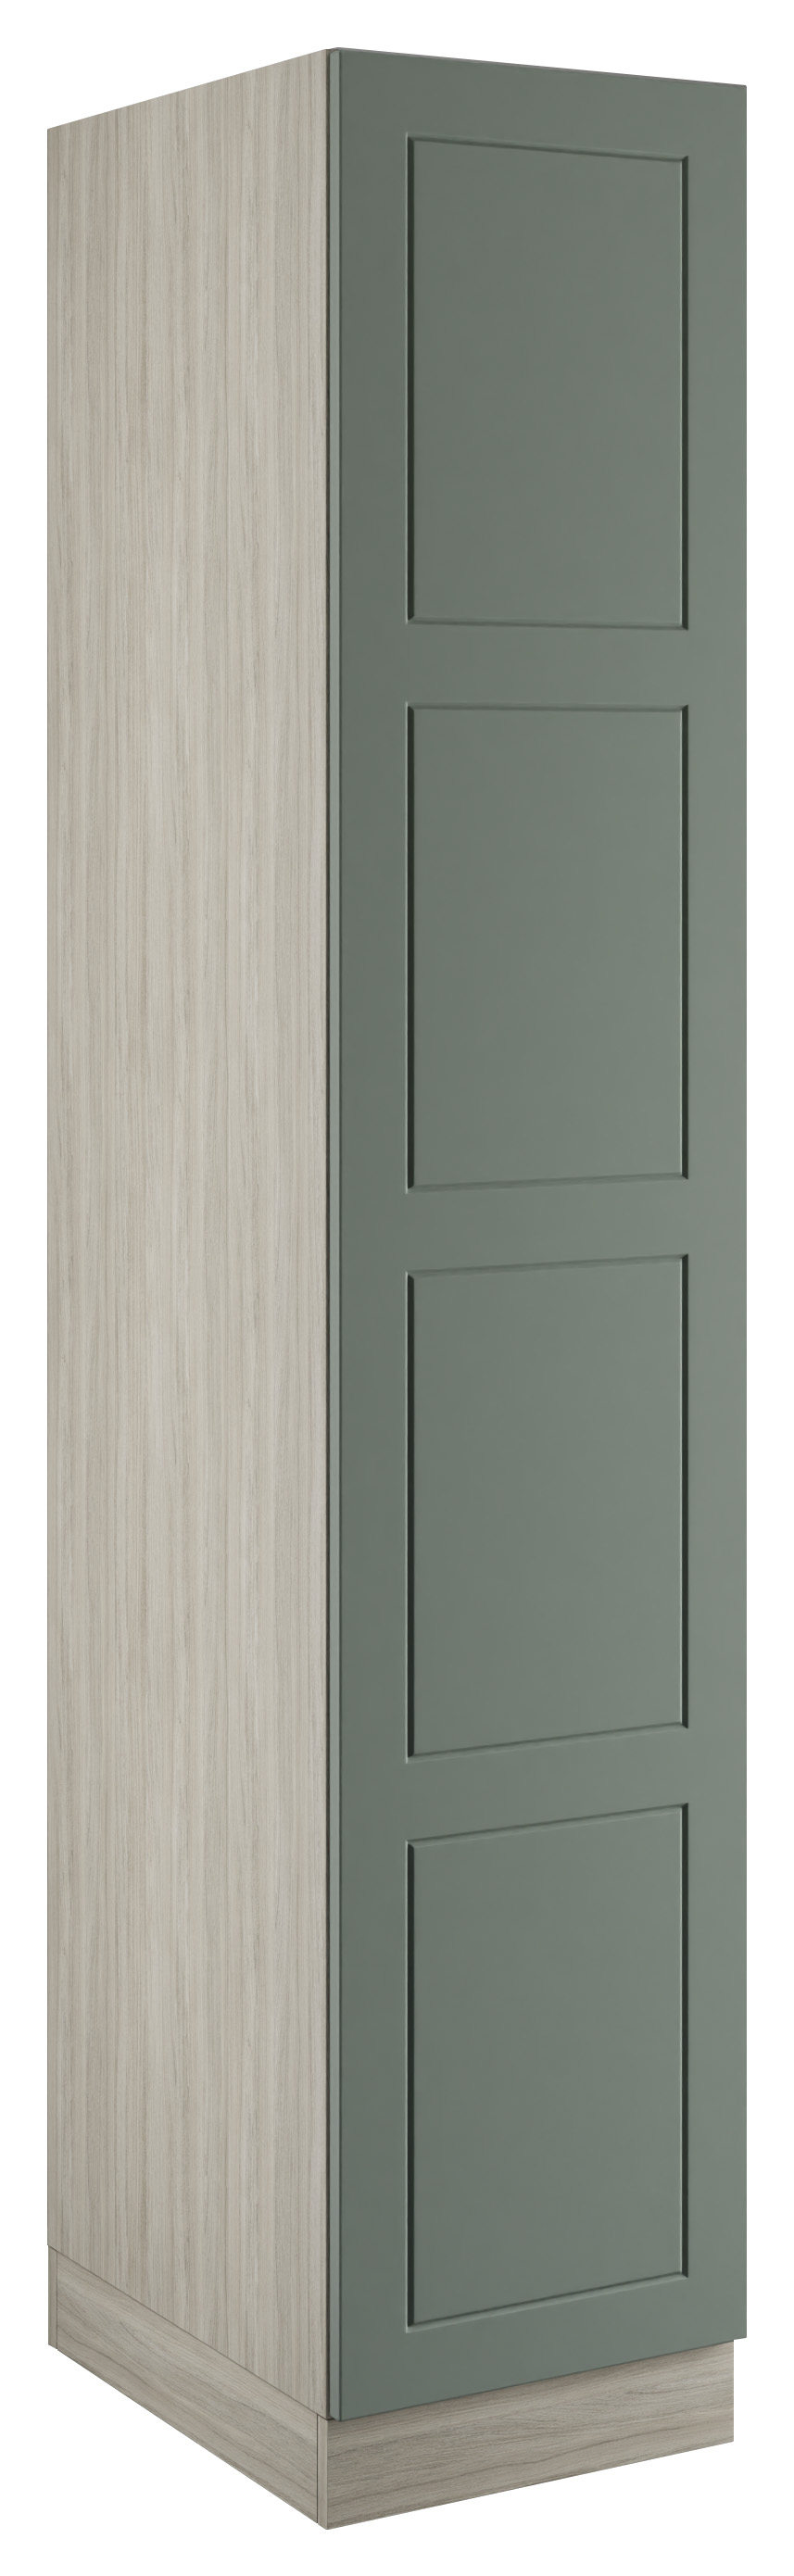 Bramham Sage Green Single Wardrobe with Shelves - 450 x 2260 x 608mm